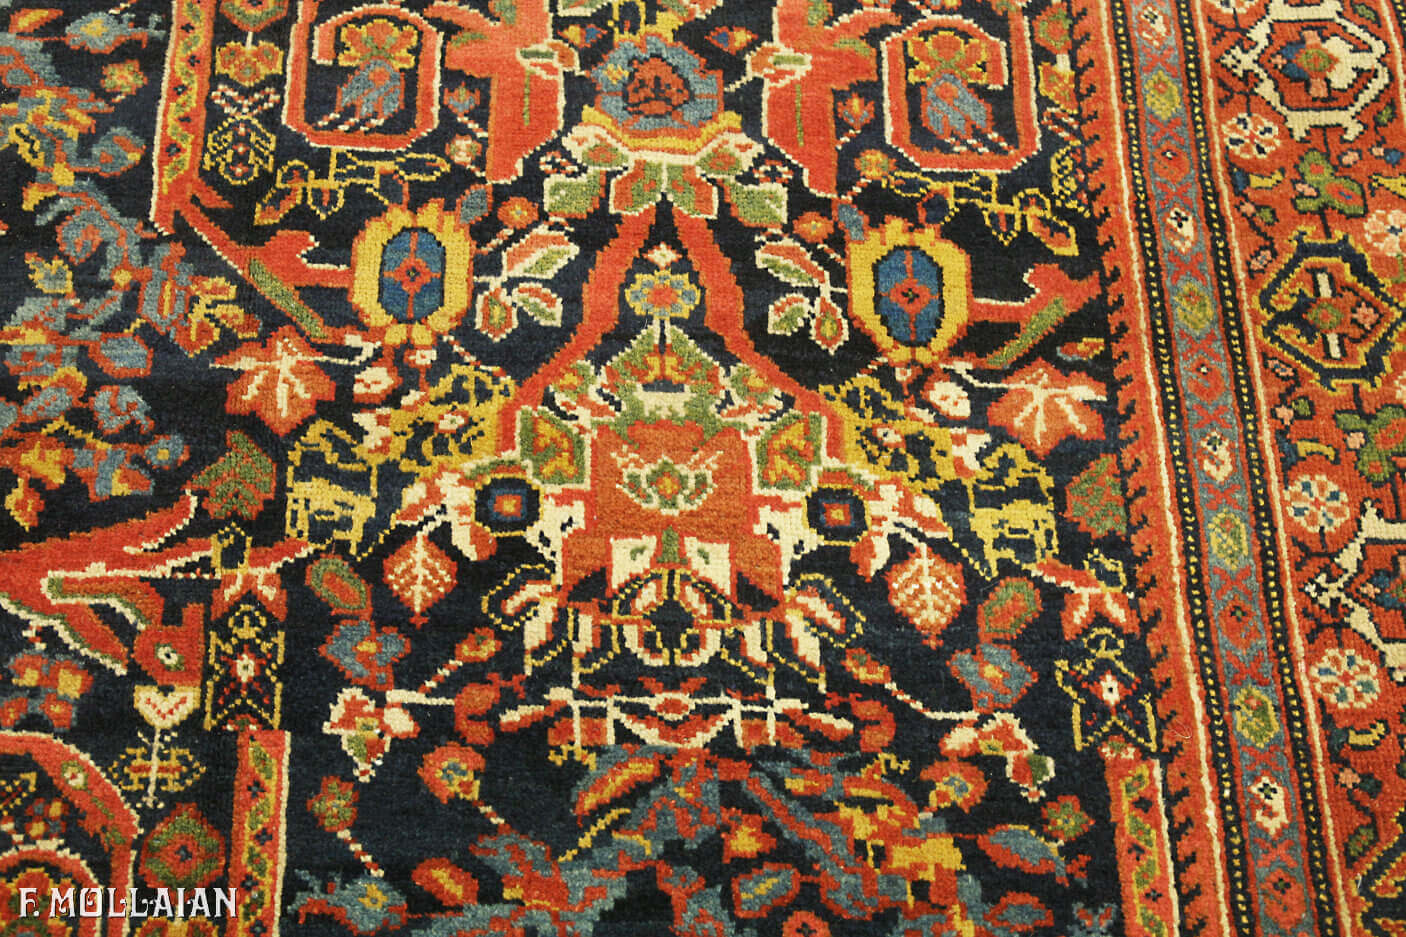 Antique Persian Mahal Gallery Size Carpet n°:92129342